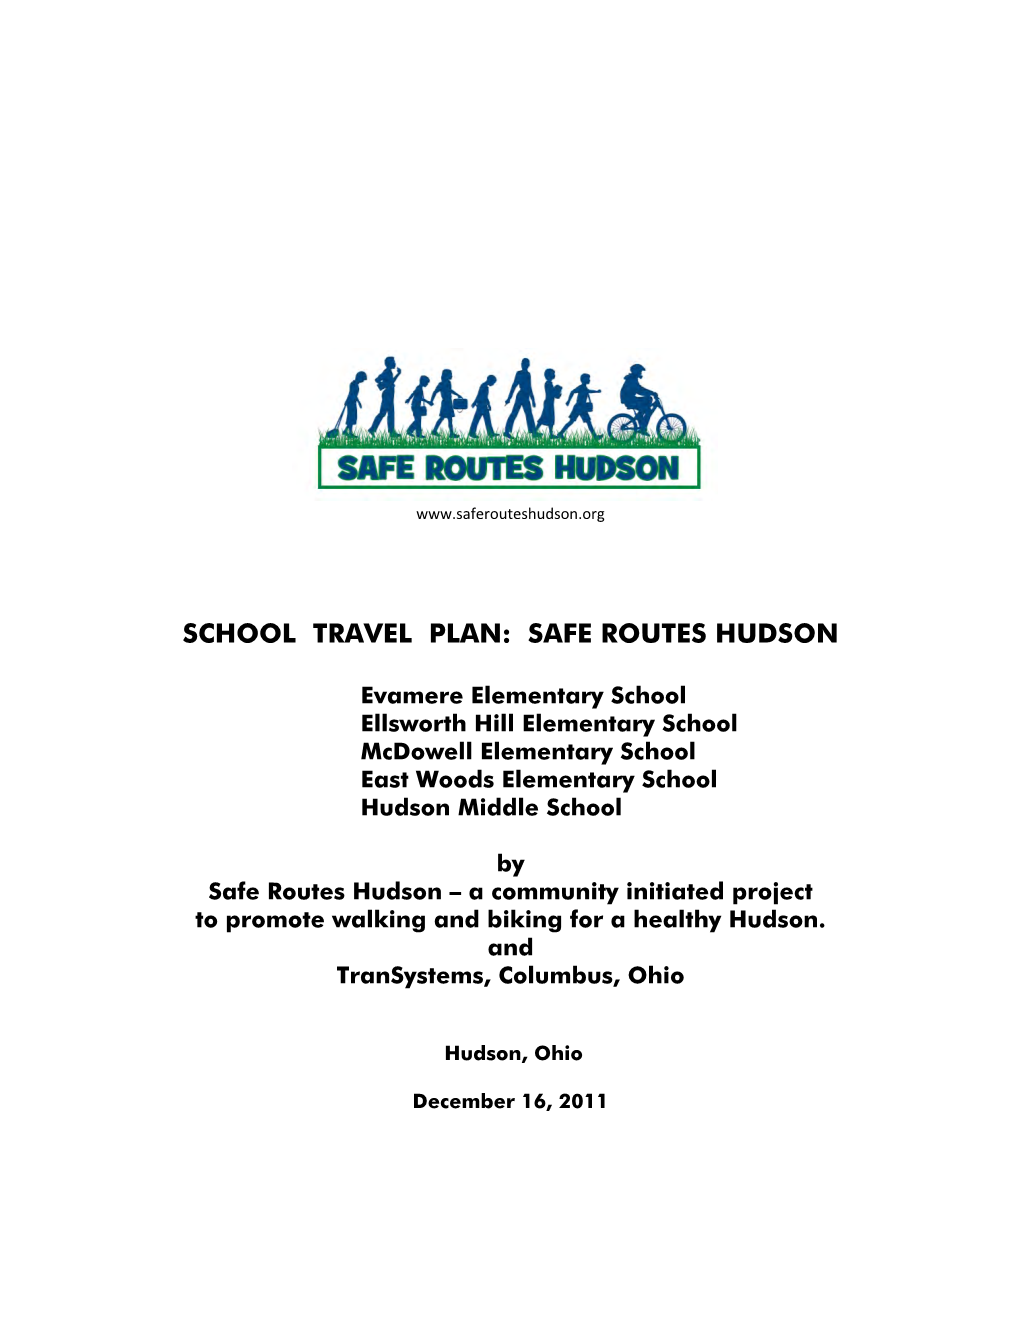 School Travel Plan: Safe Routes Hudson